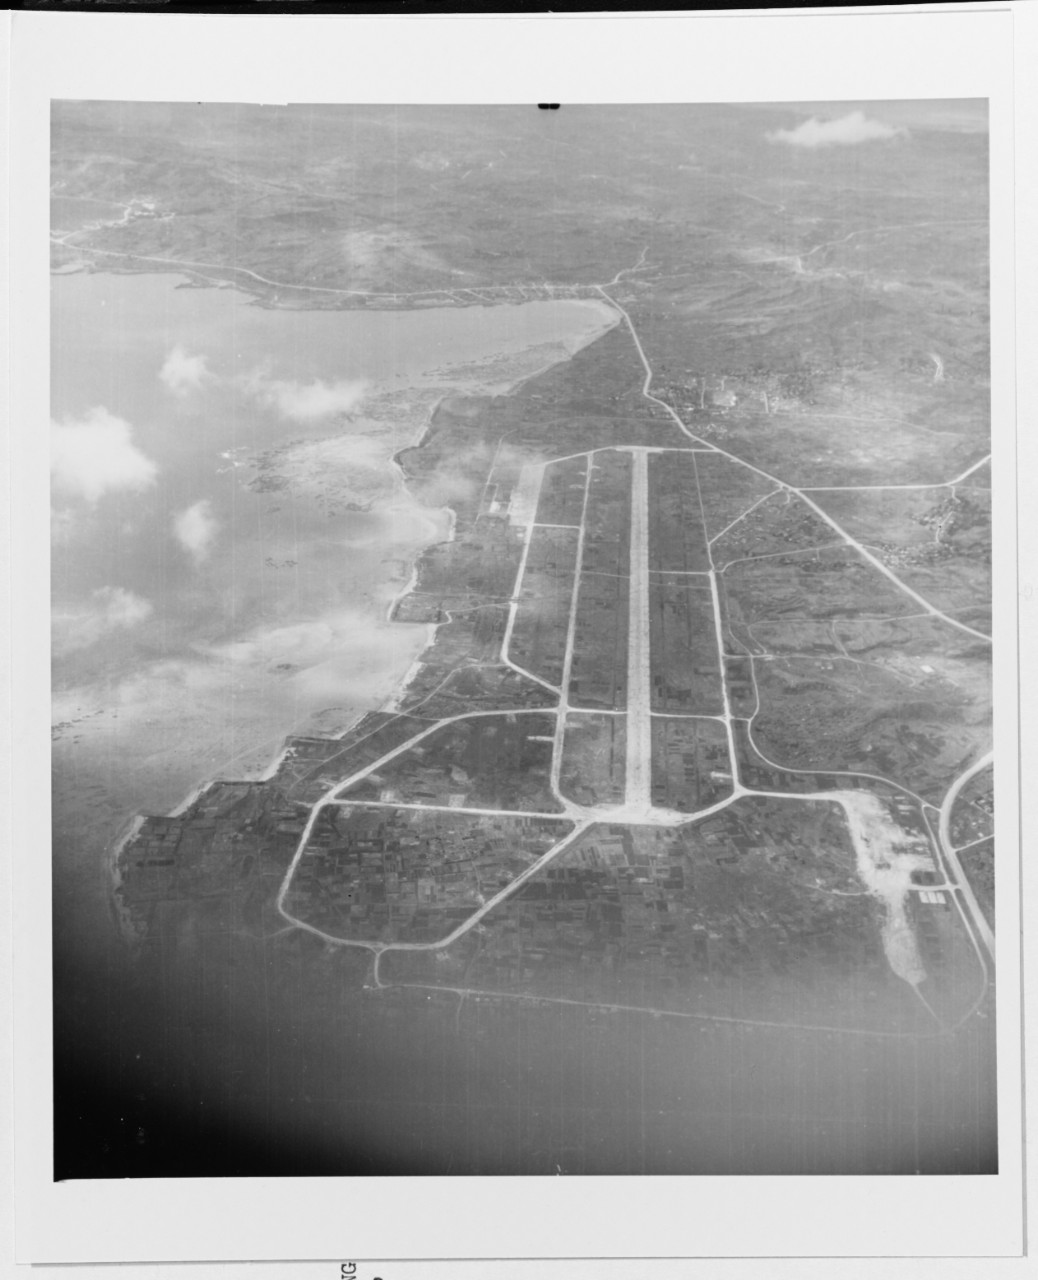 Yonabaru Airfield, Okinawa